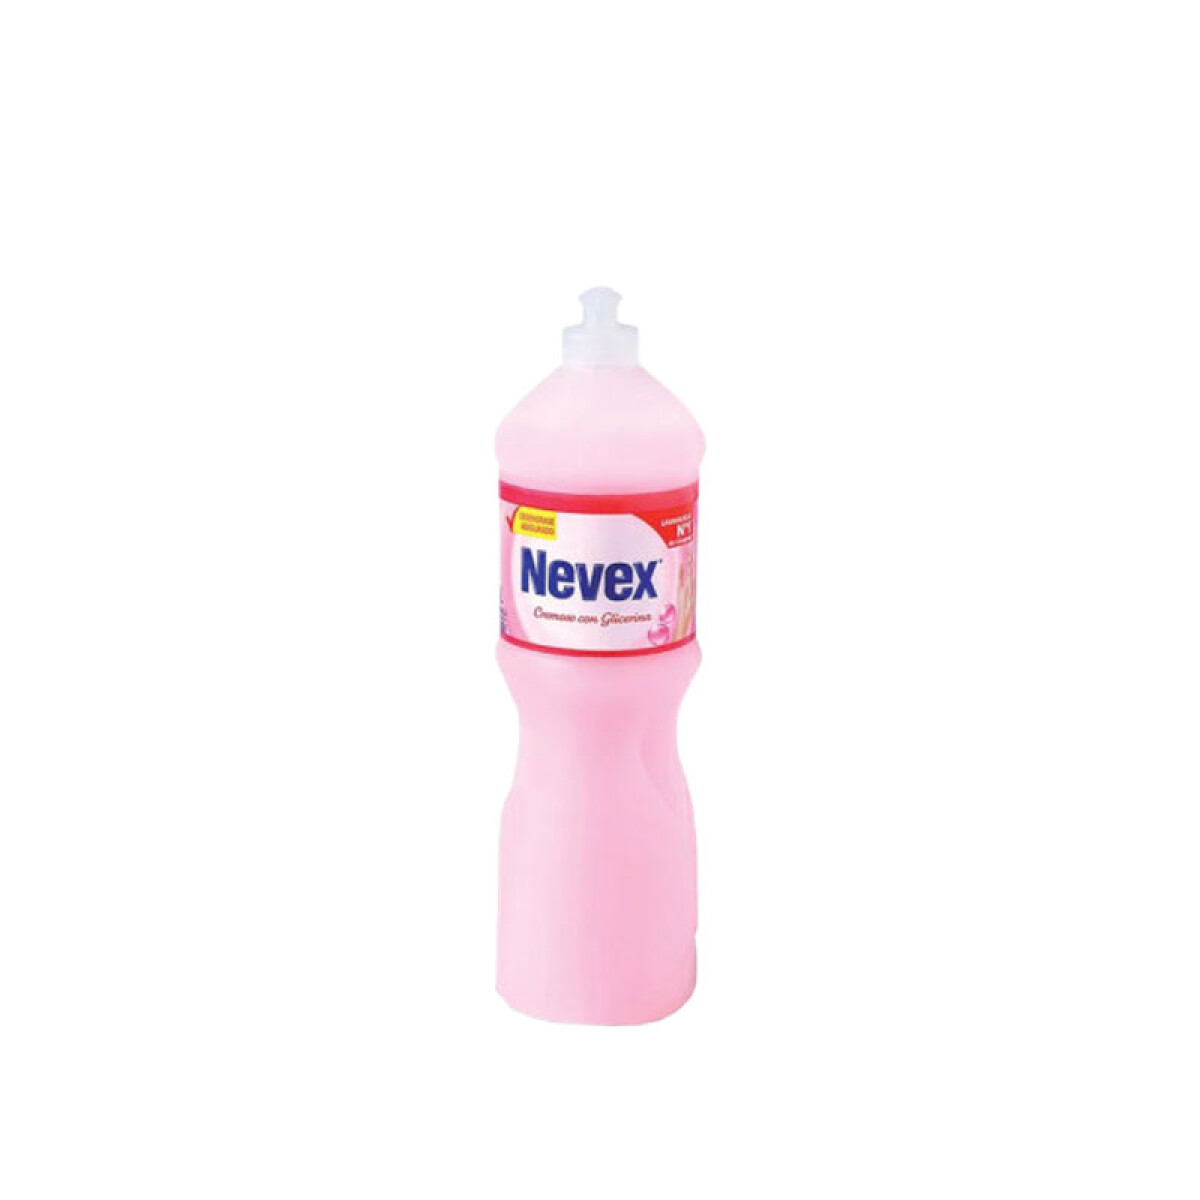 Detergente NEVEX Cremoso 1250ml - Glicerina 